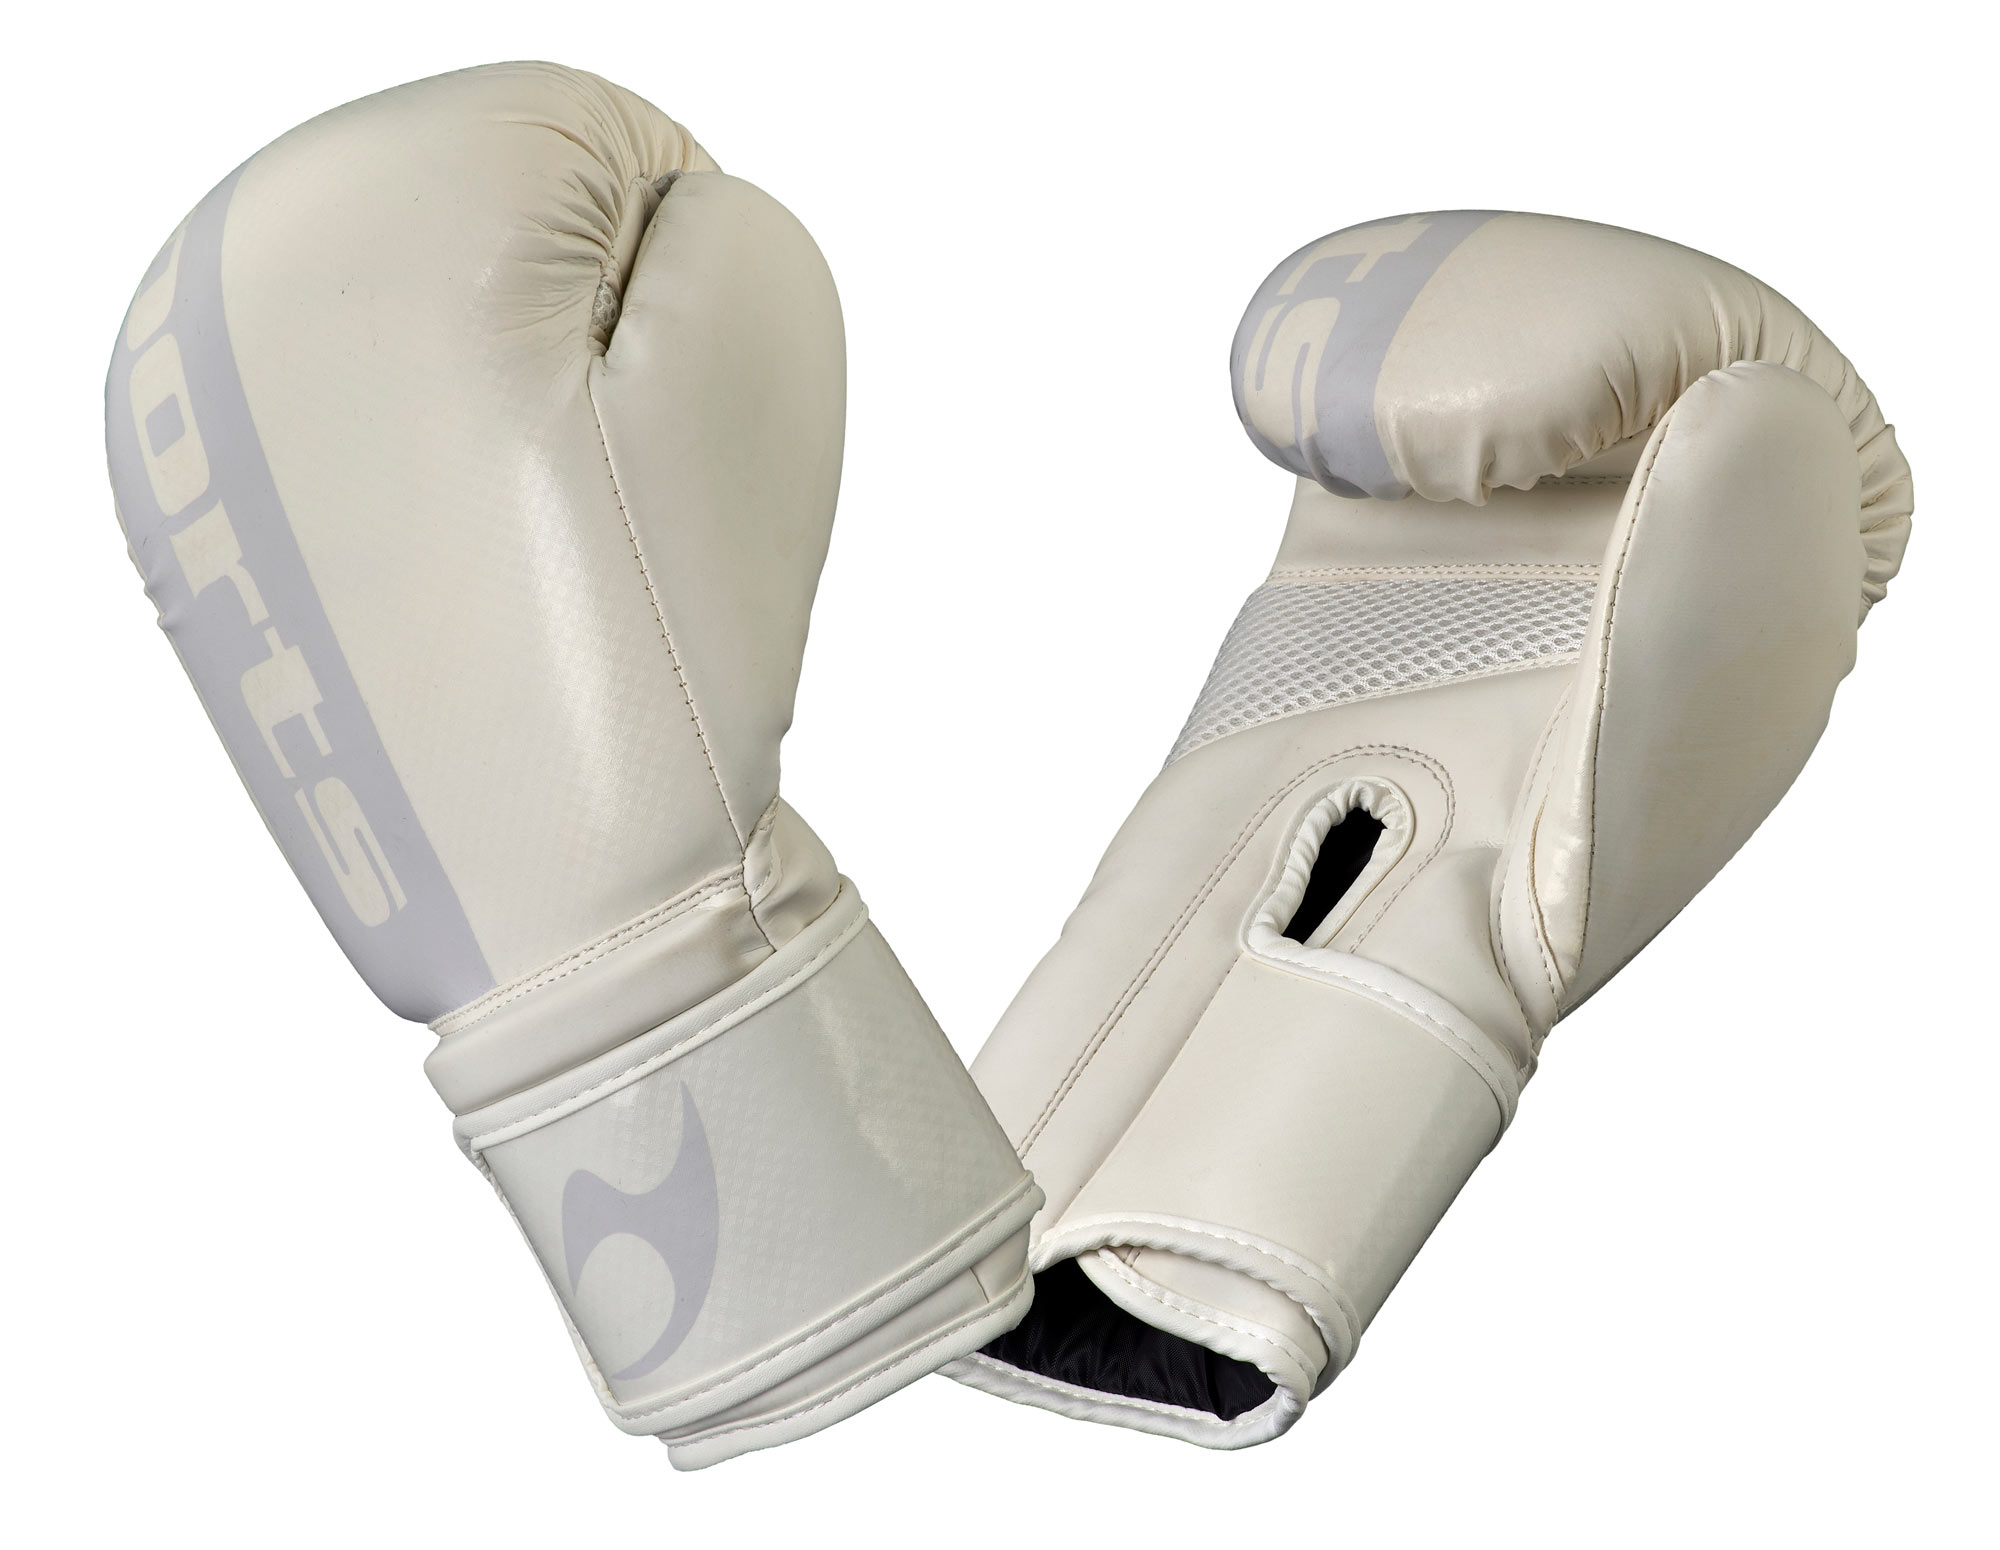 Ju-Sports Boxing Gloves Paladin